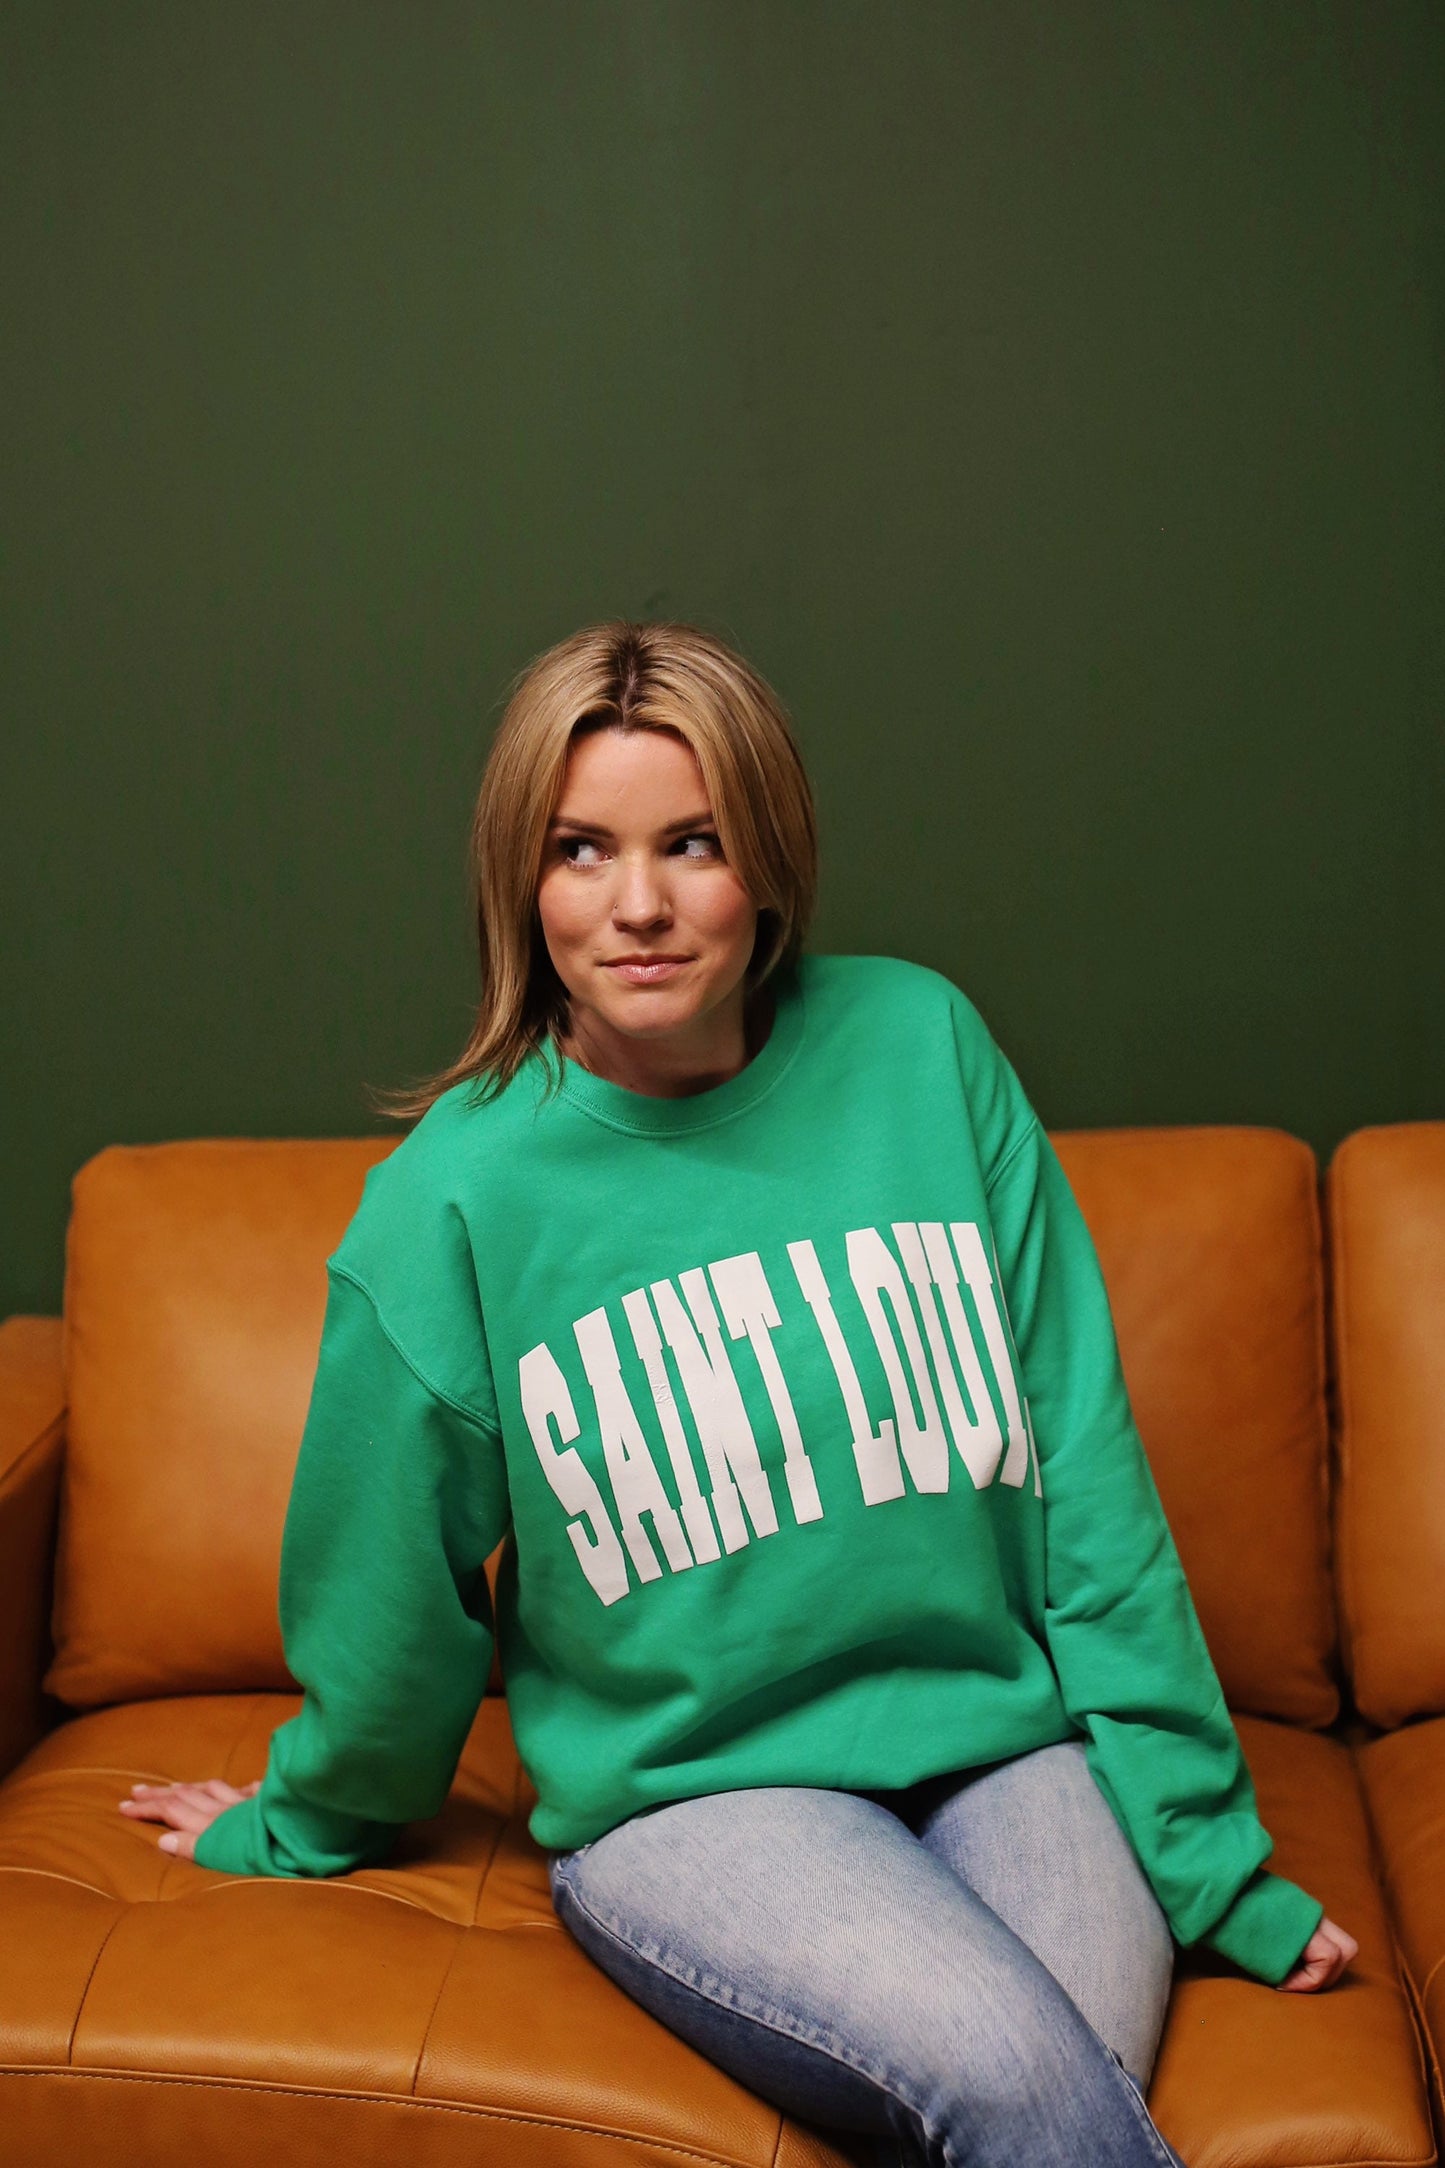 Saint Louis Green sweatshirt